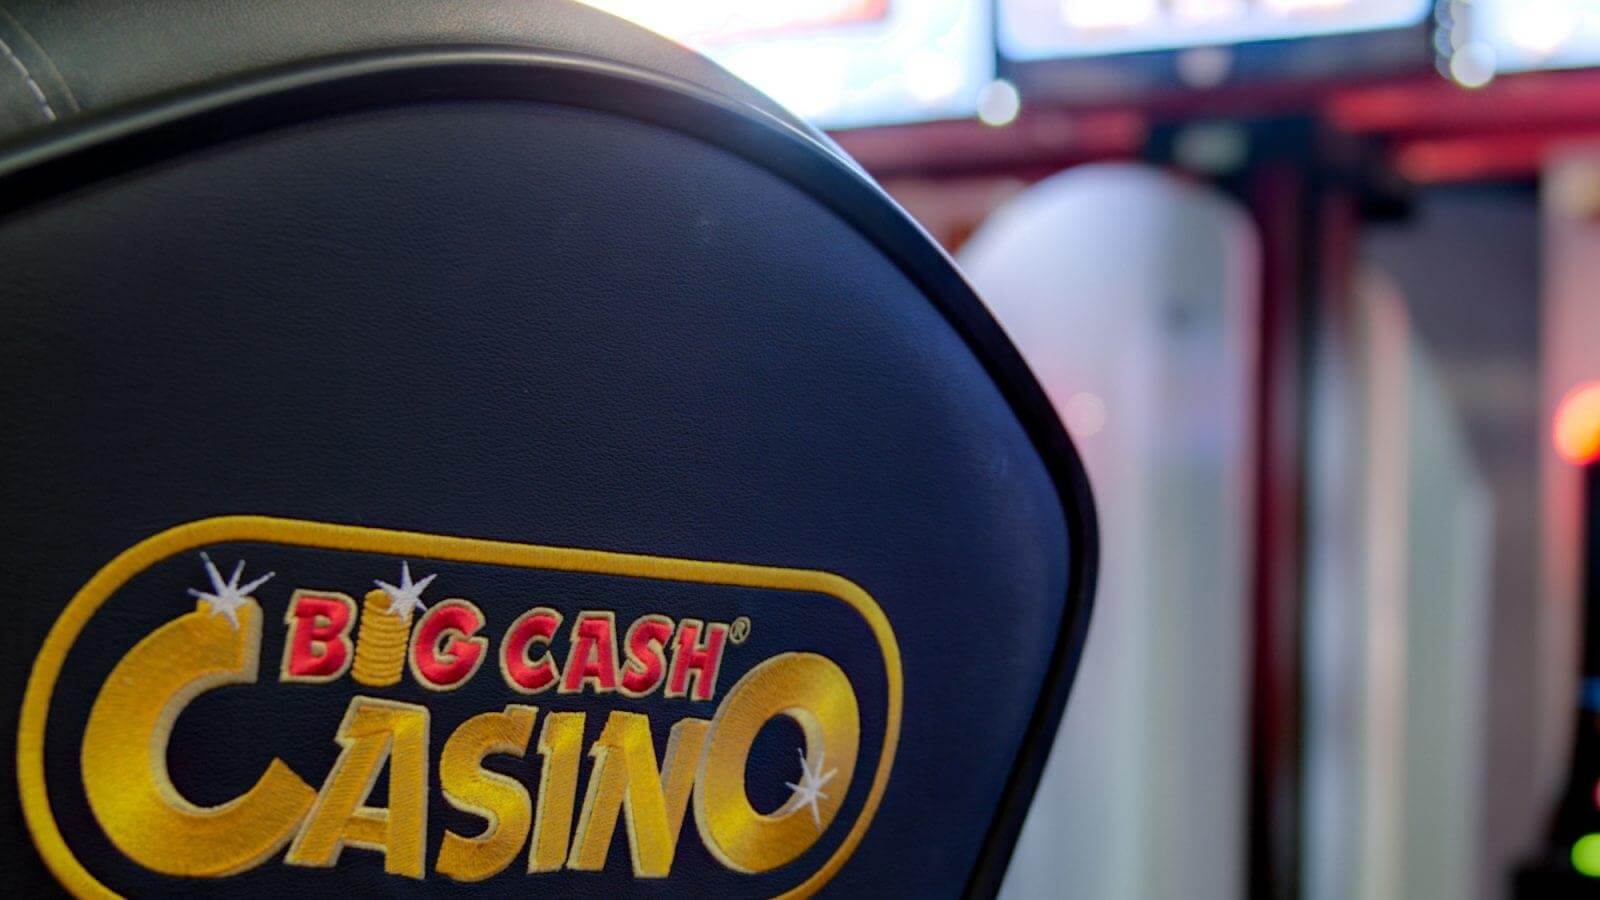 BIG CASH Marke Casinosessel